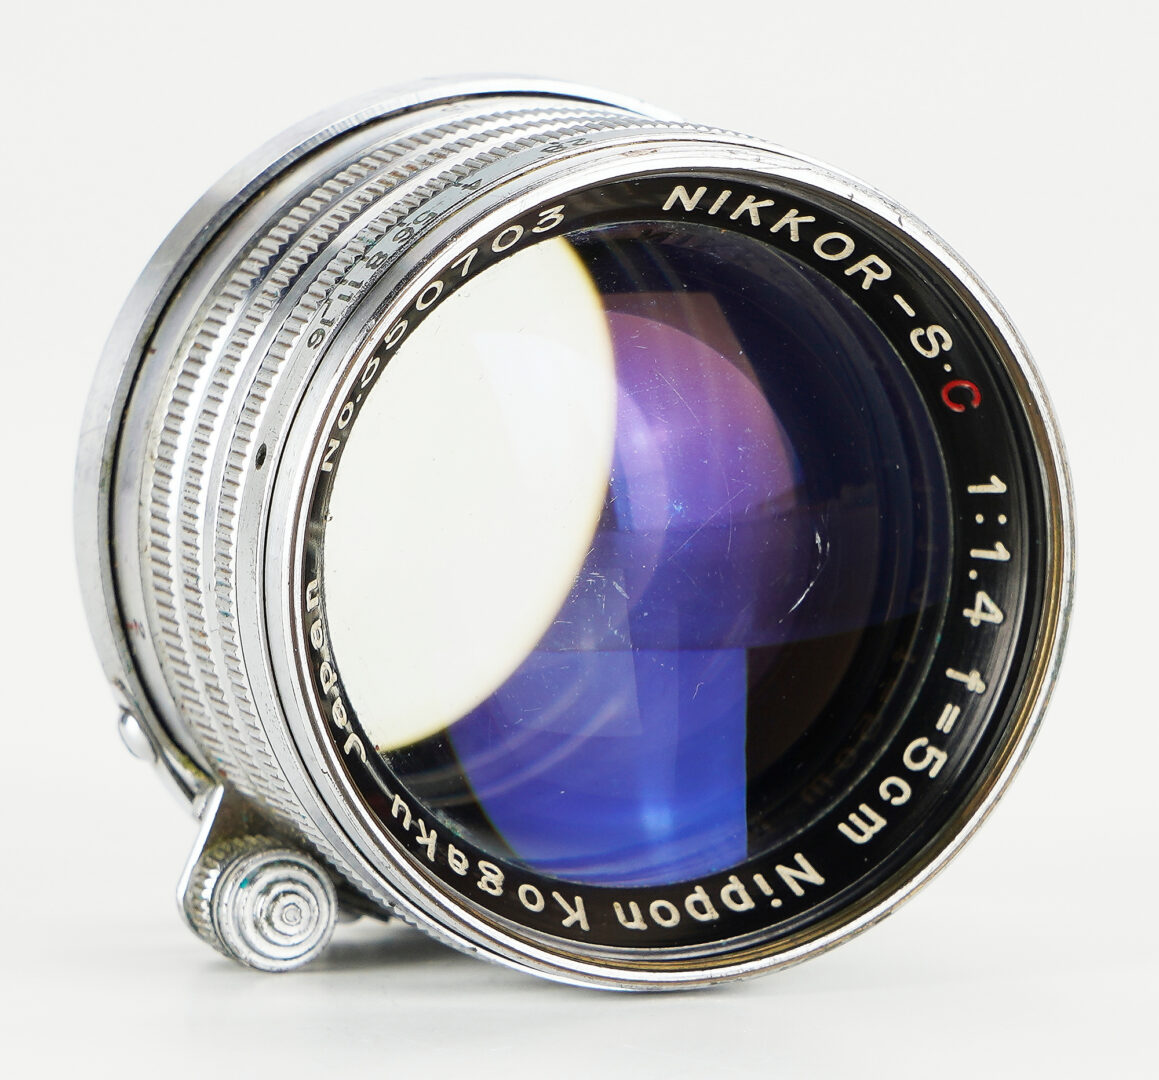 Lot 742: Leica IIIf Camera w/ Accessories, 8 items